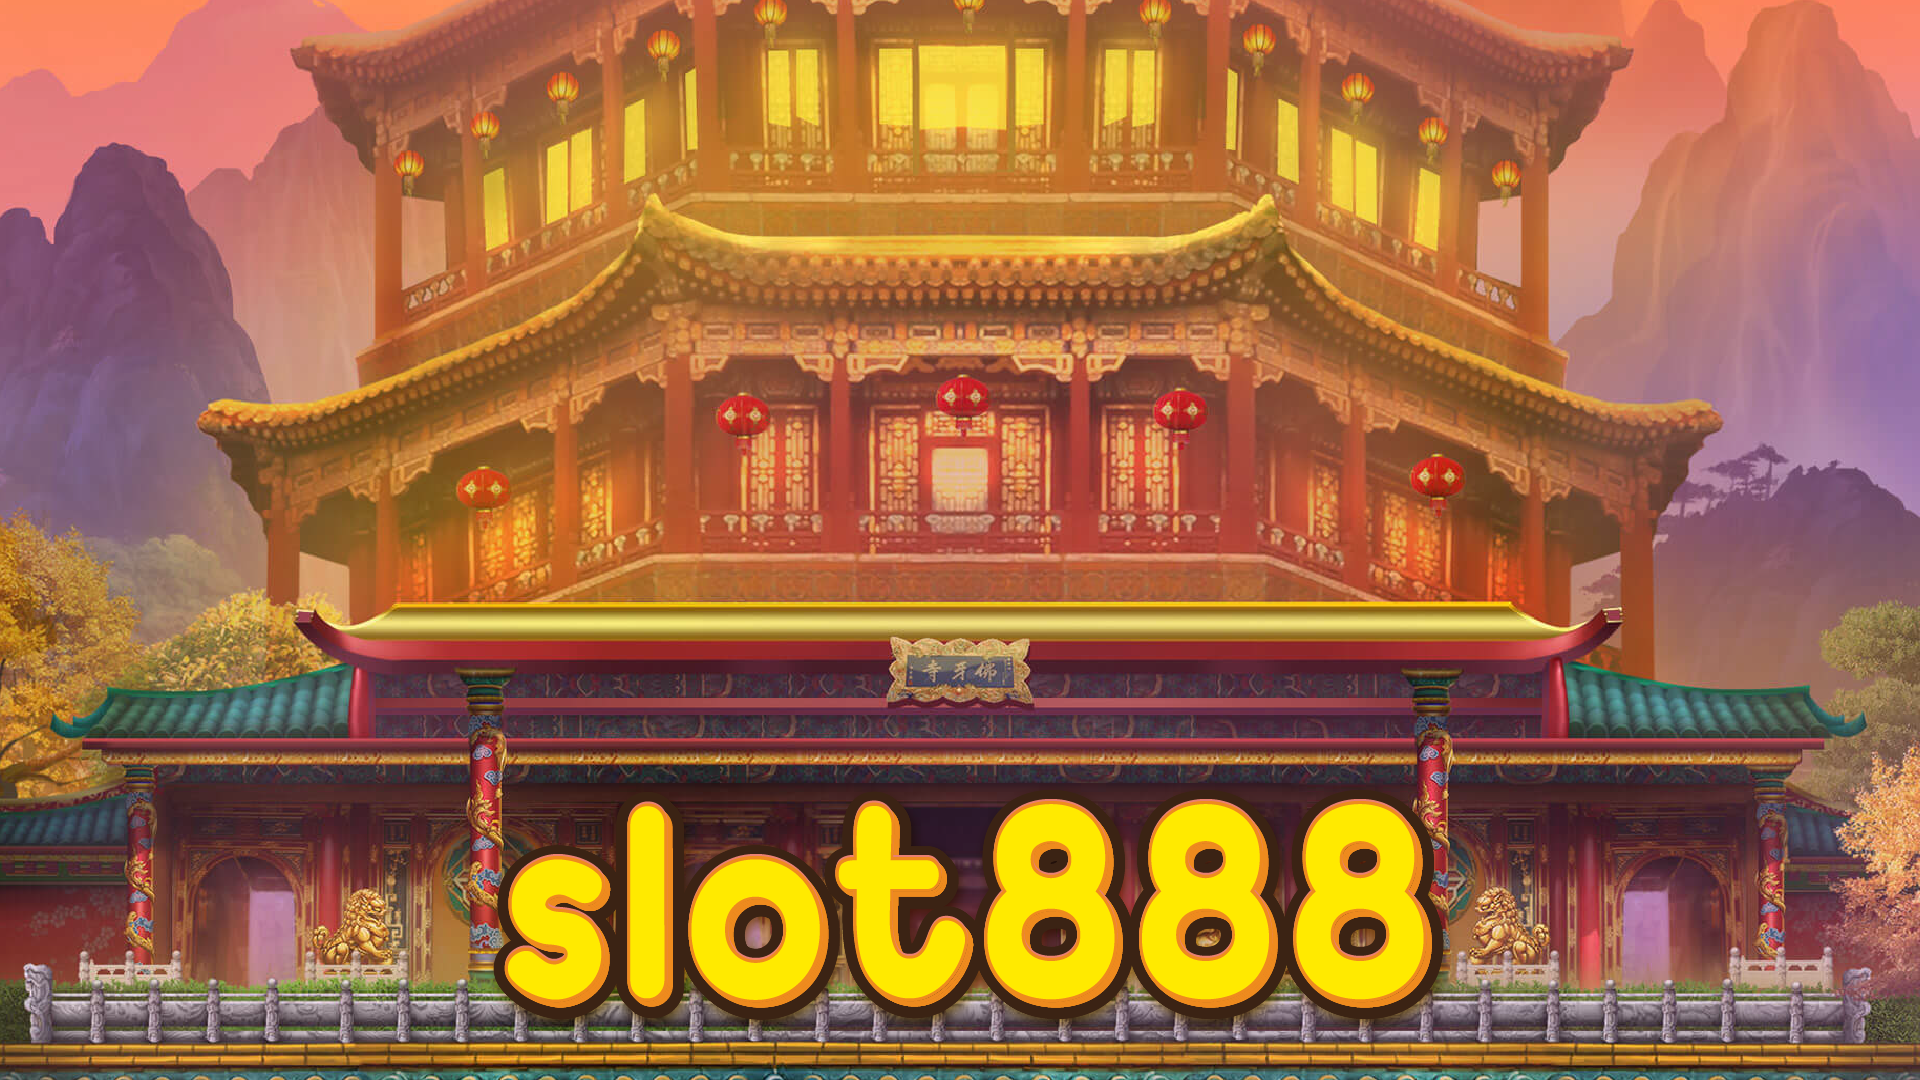 slot888 เล่นสล็อตเว็บตรง คาสิโนออนไลน์ เงินรางวัลสูง สมัครง่ายได้ทันที